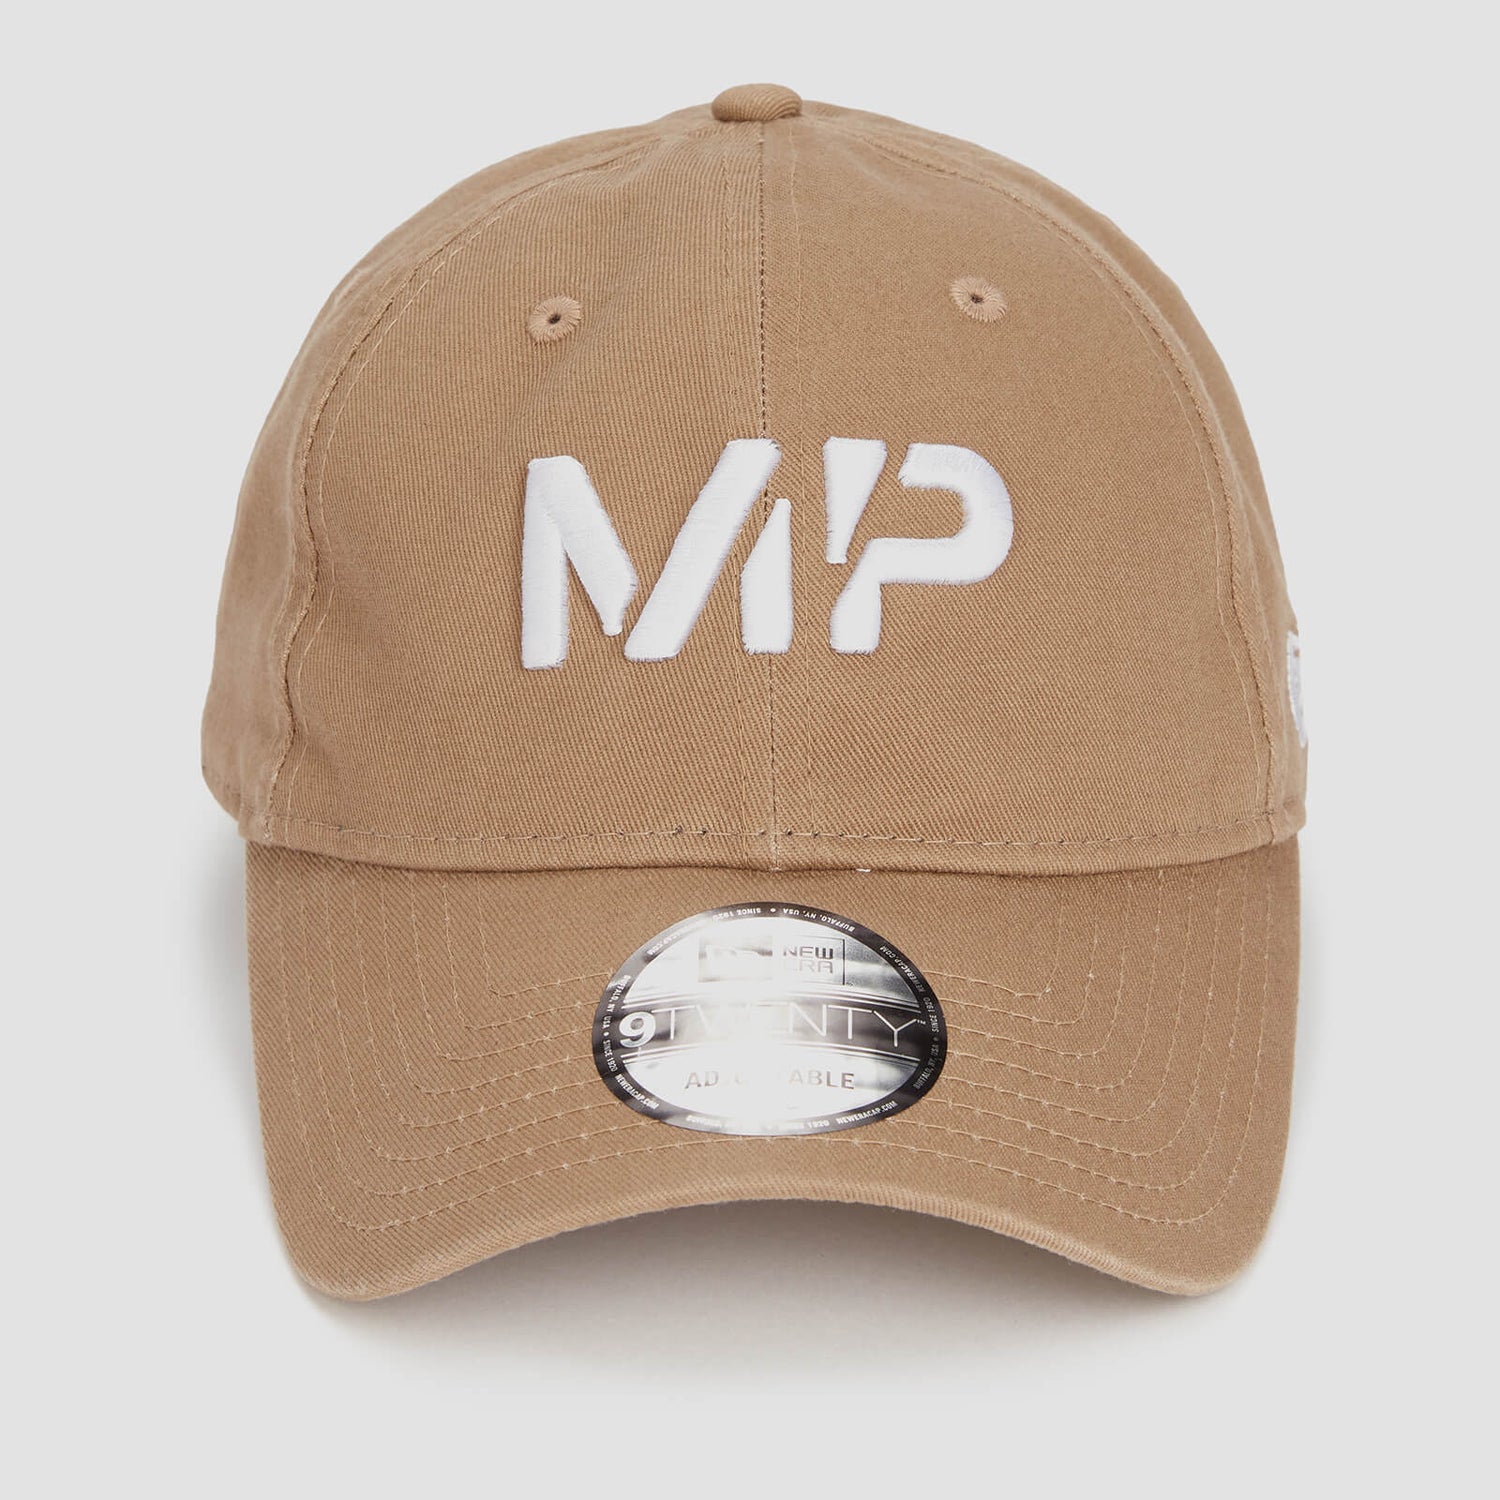 MP 9TWENTY Baseball Cap - Taupe/White